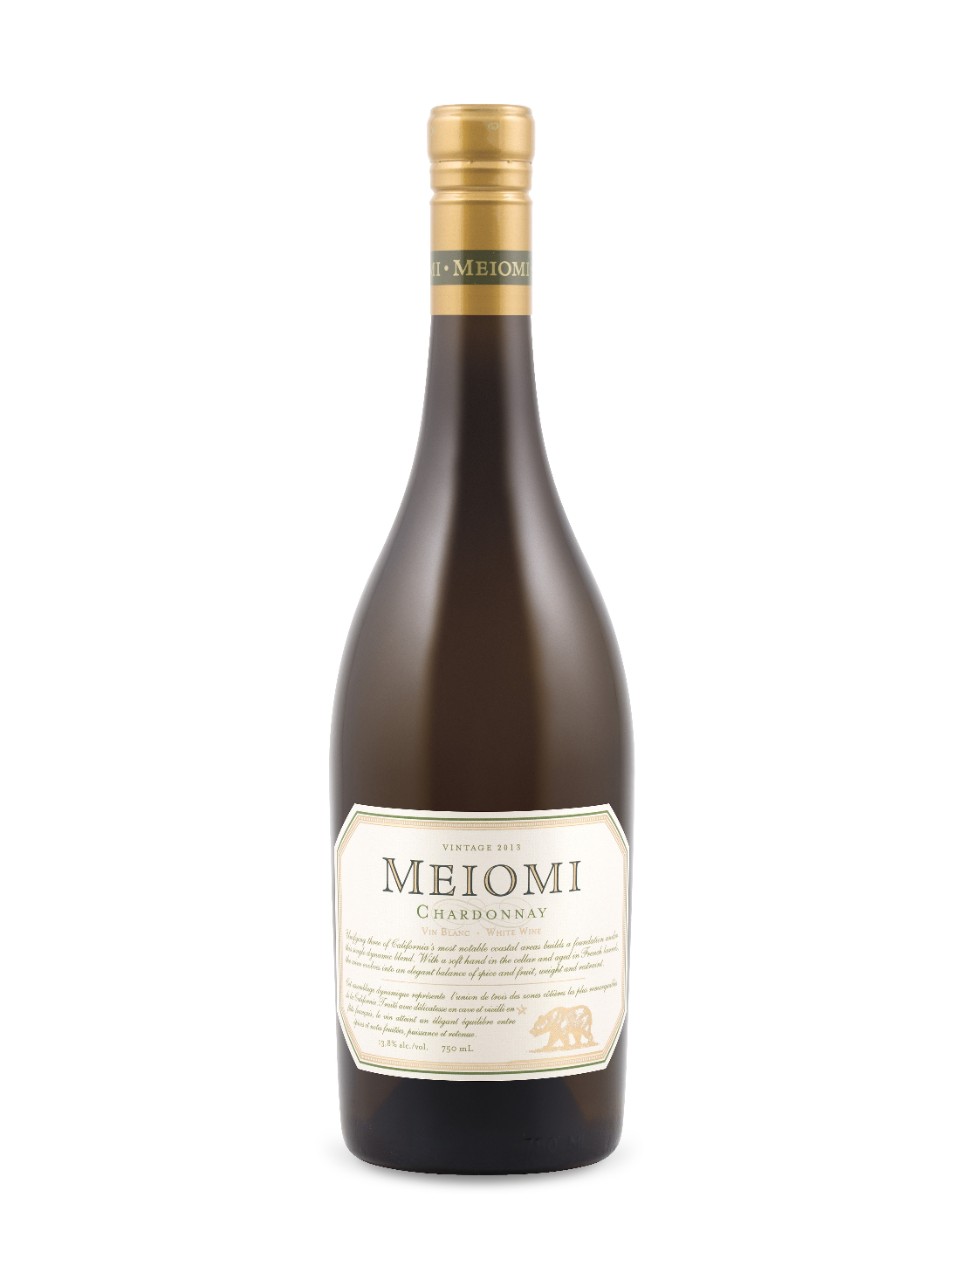 Meiomi Chardonnay 2014